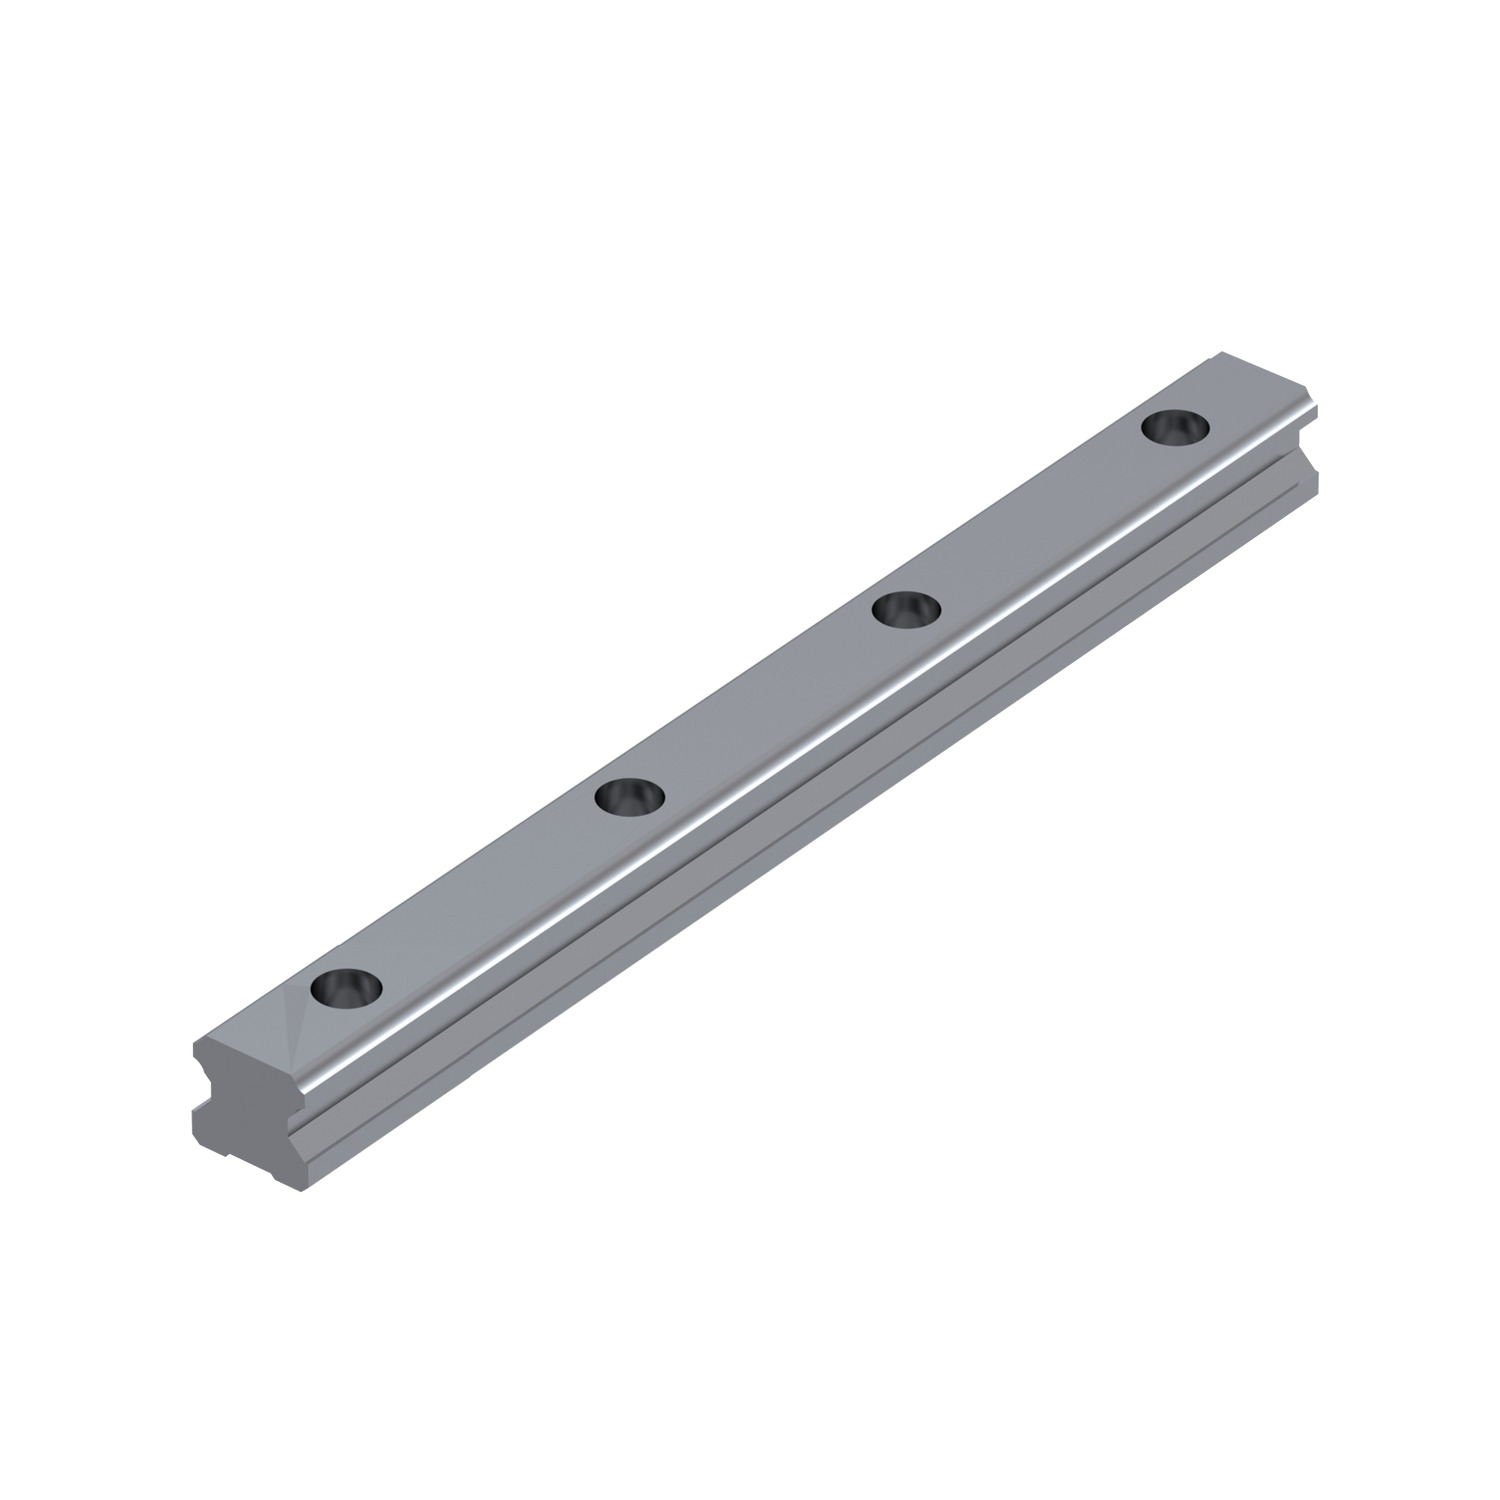 Product L1016.55, 55mm Linear Guide Rail standard / 